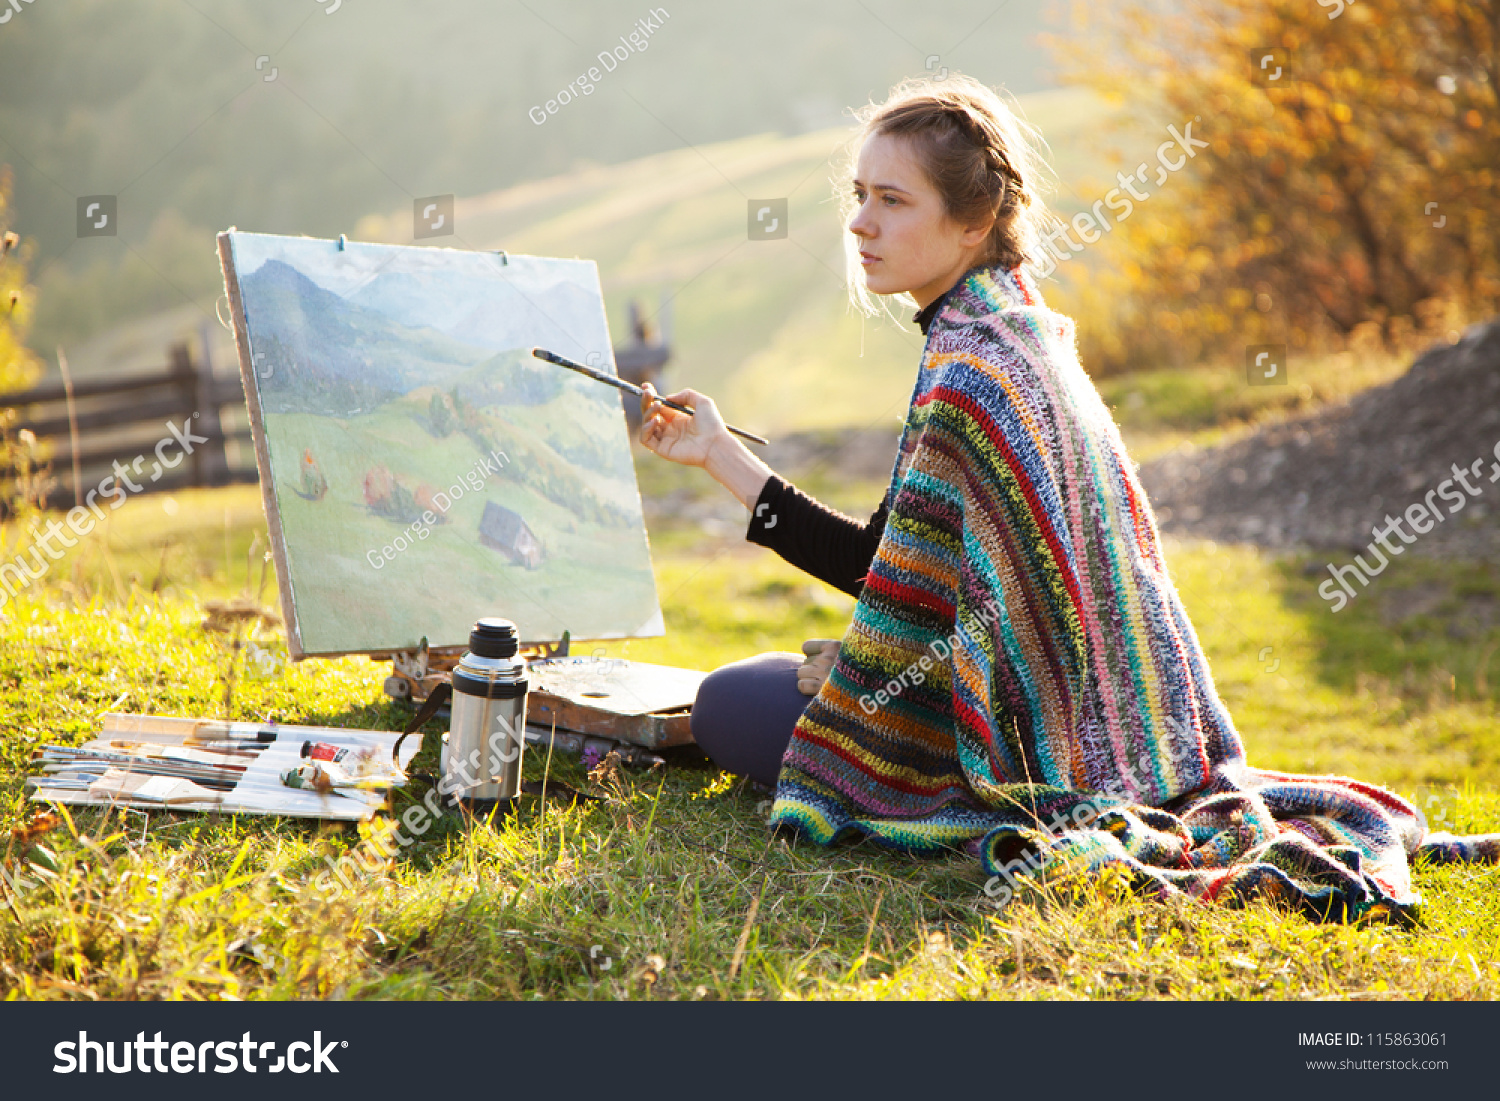 Young artist painting an autumn landscape #115863061